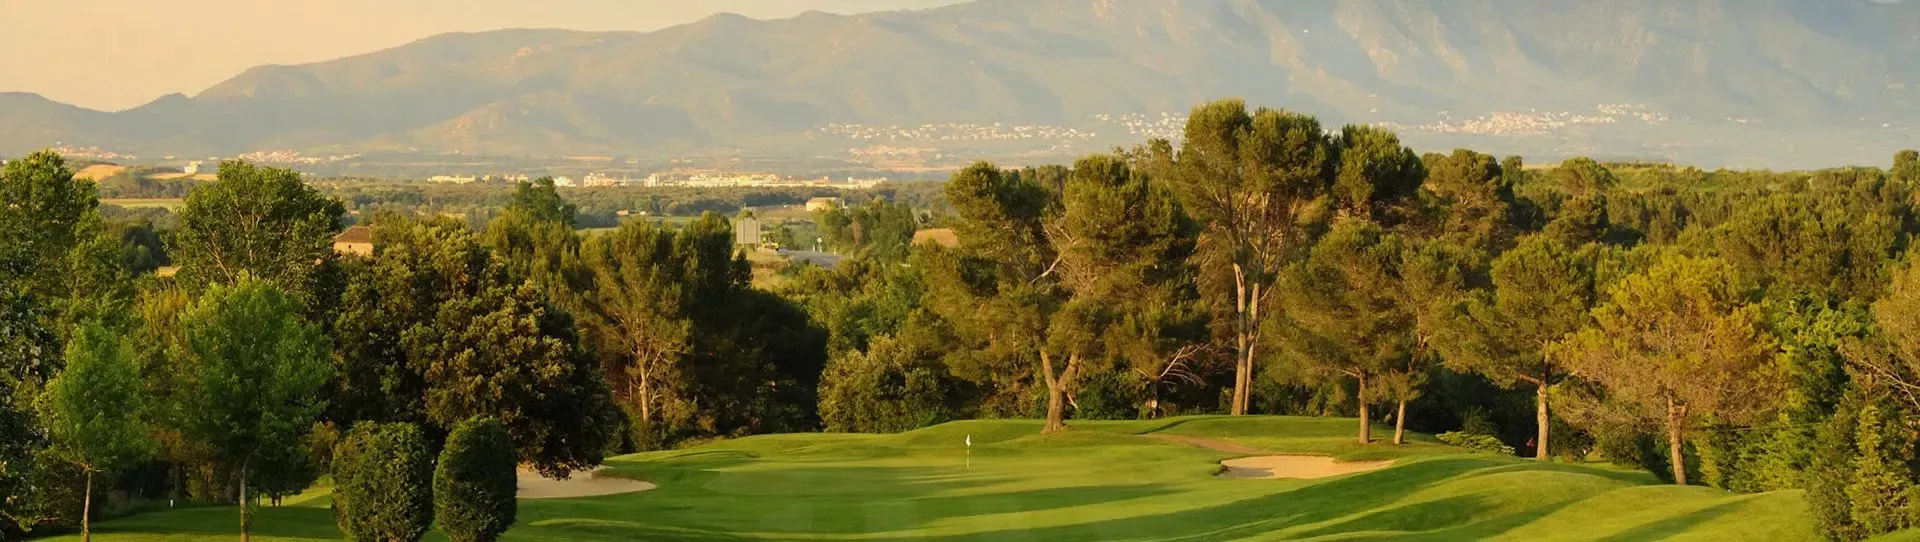 Spain golf courses - Torremirona Golf Course - Photo 3